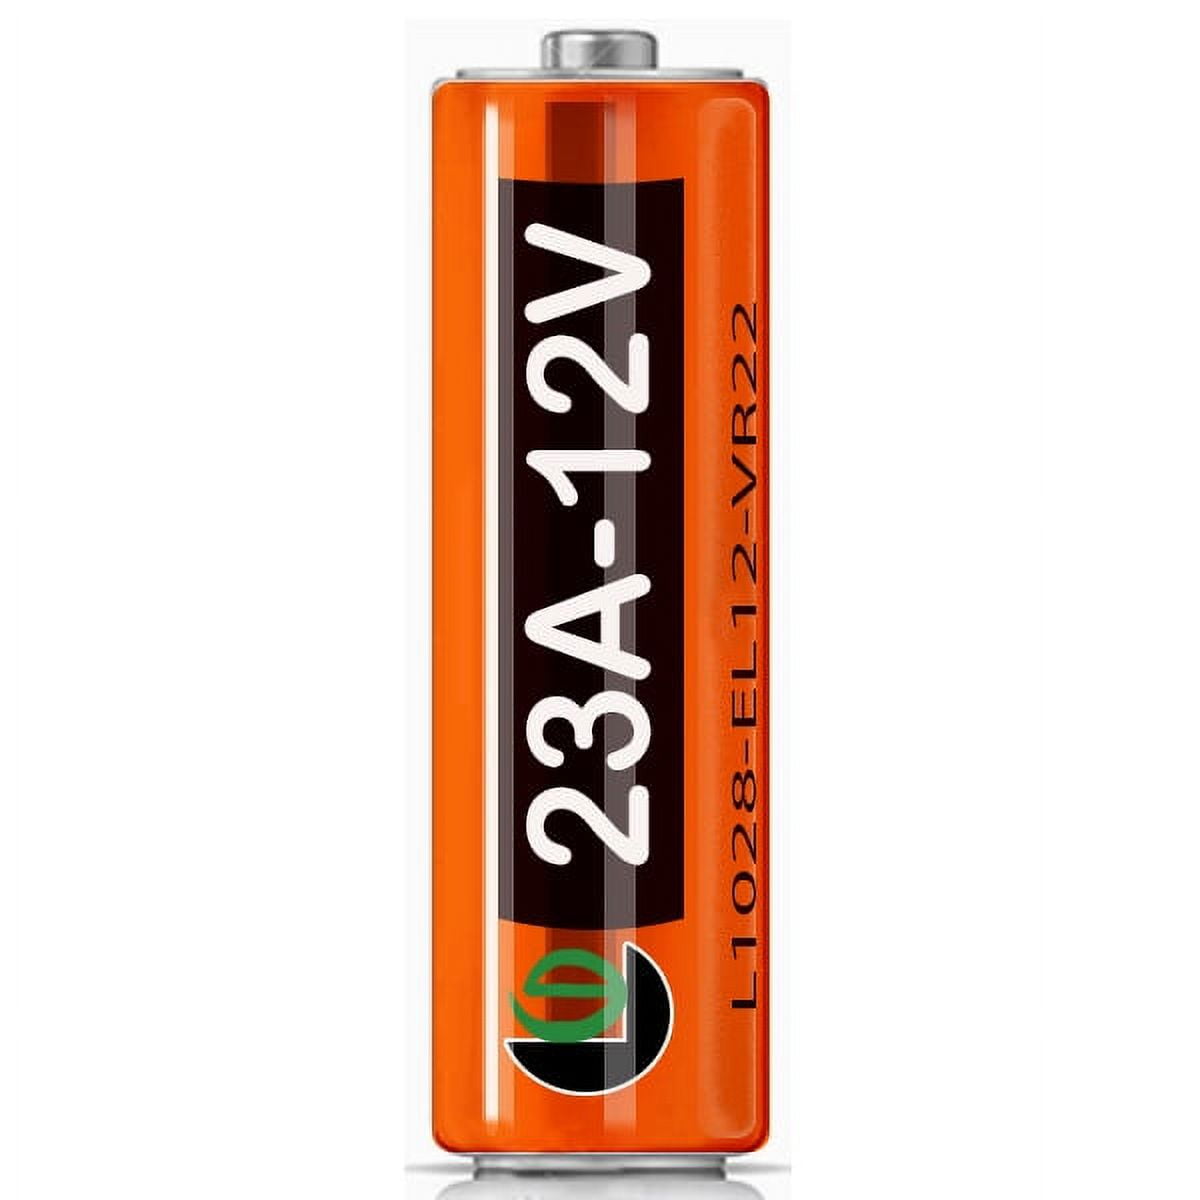 Vinnic L1028F-C5 23A - Alkaline spesial batterier - batteripower